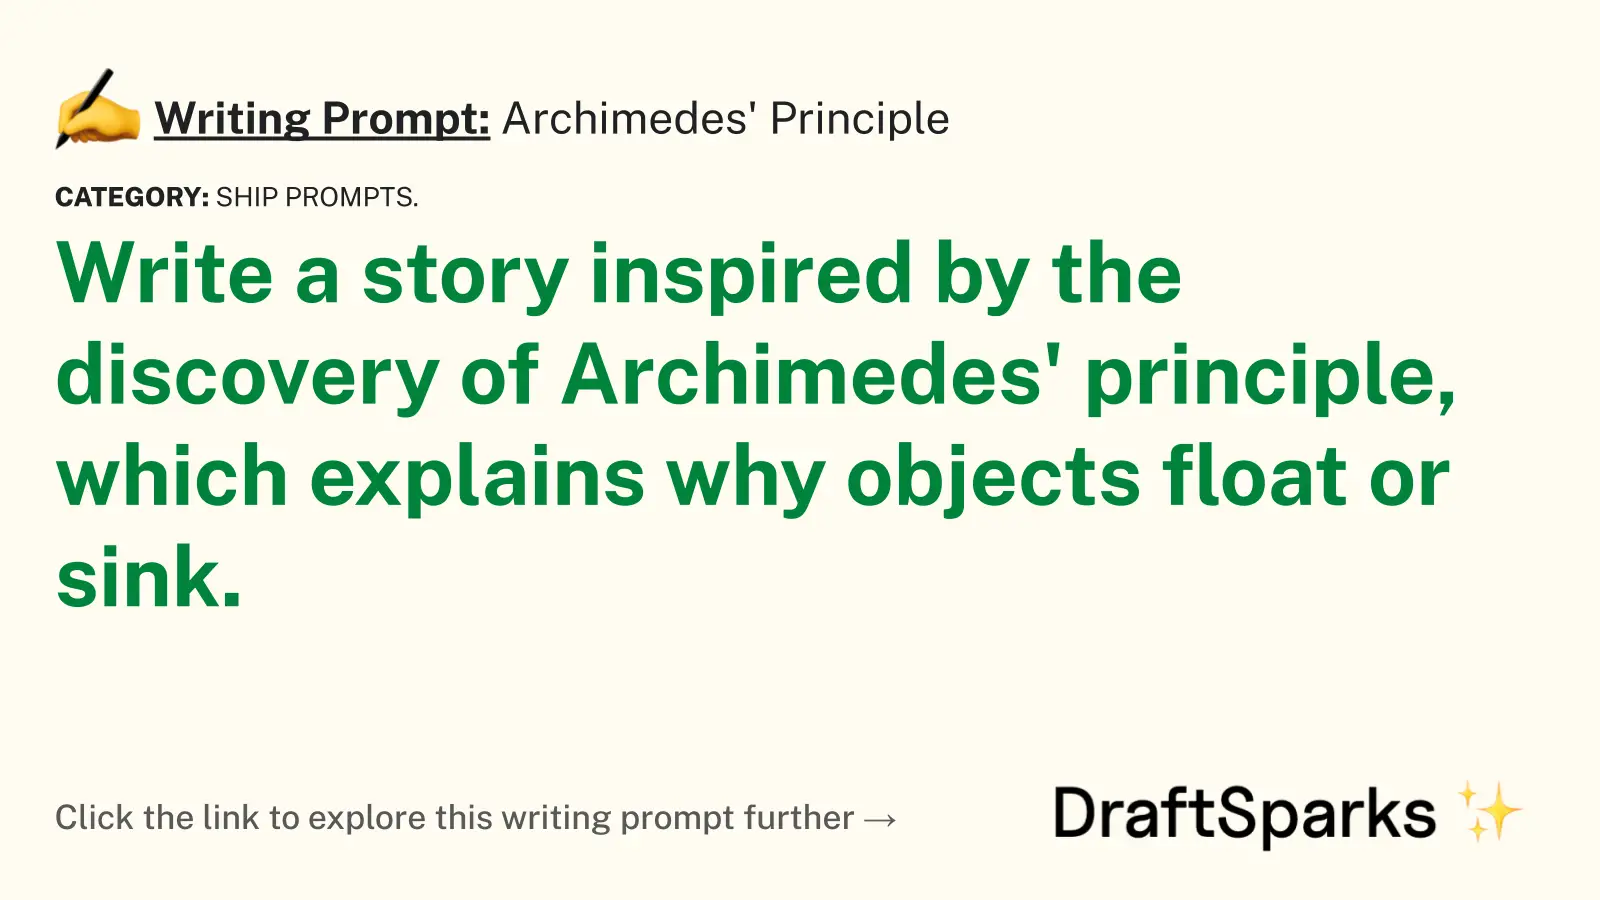 Archimedes’ Principle